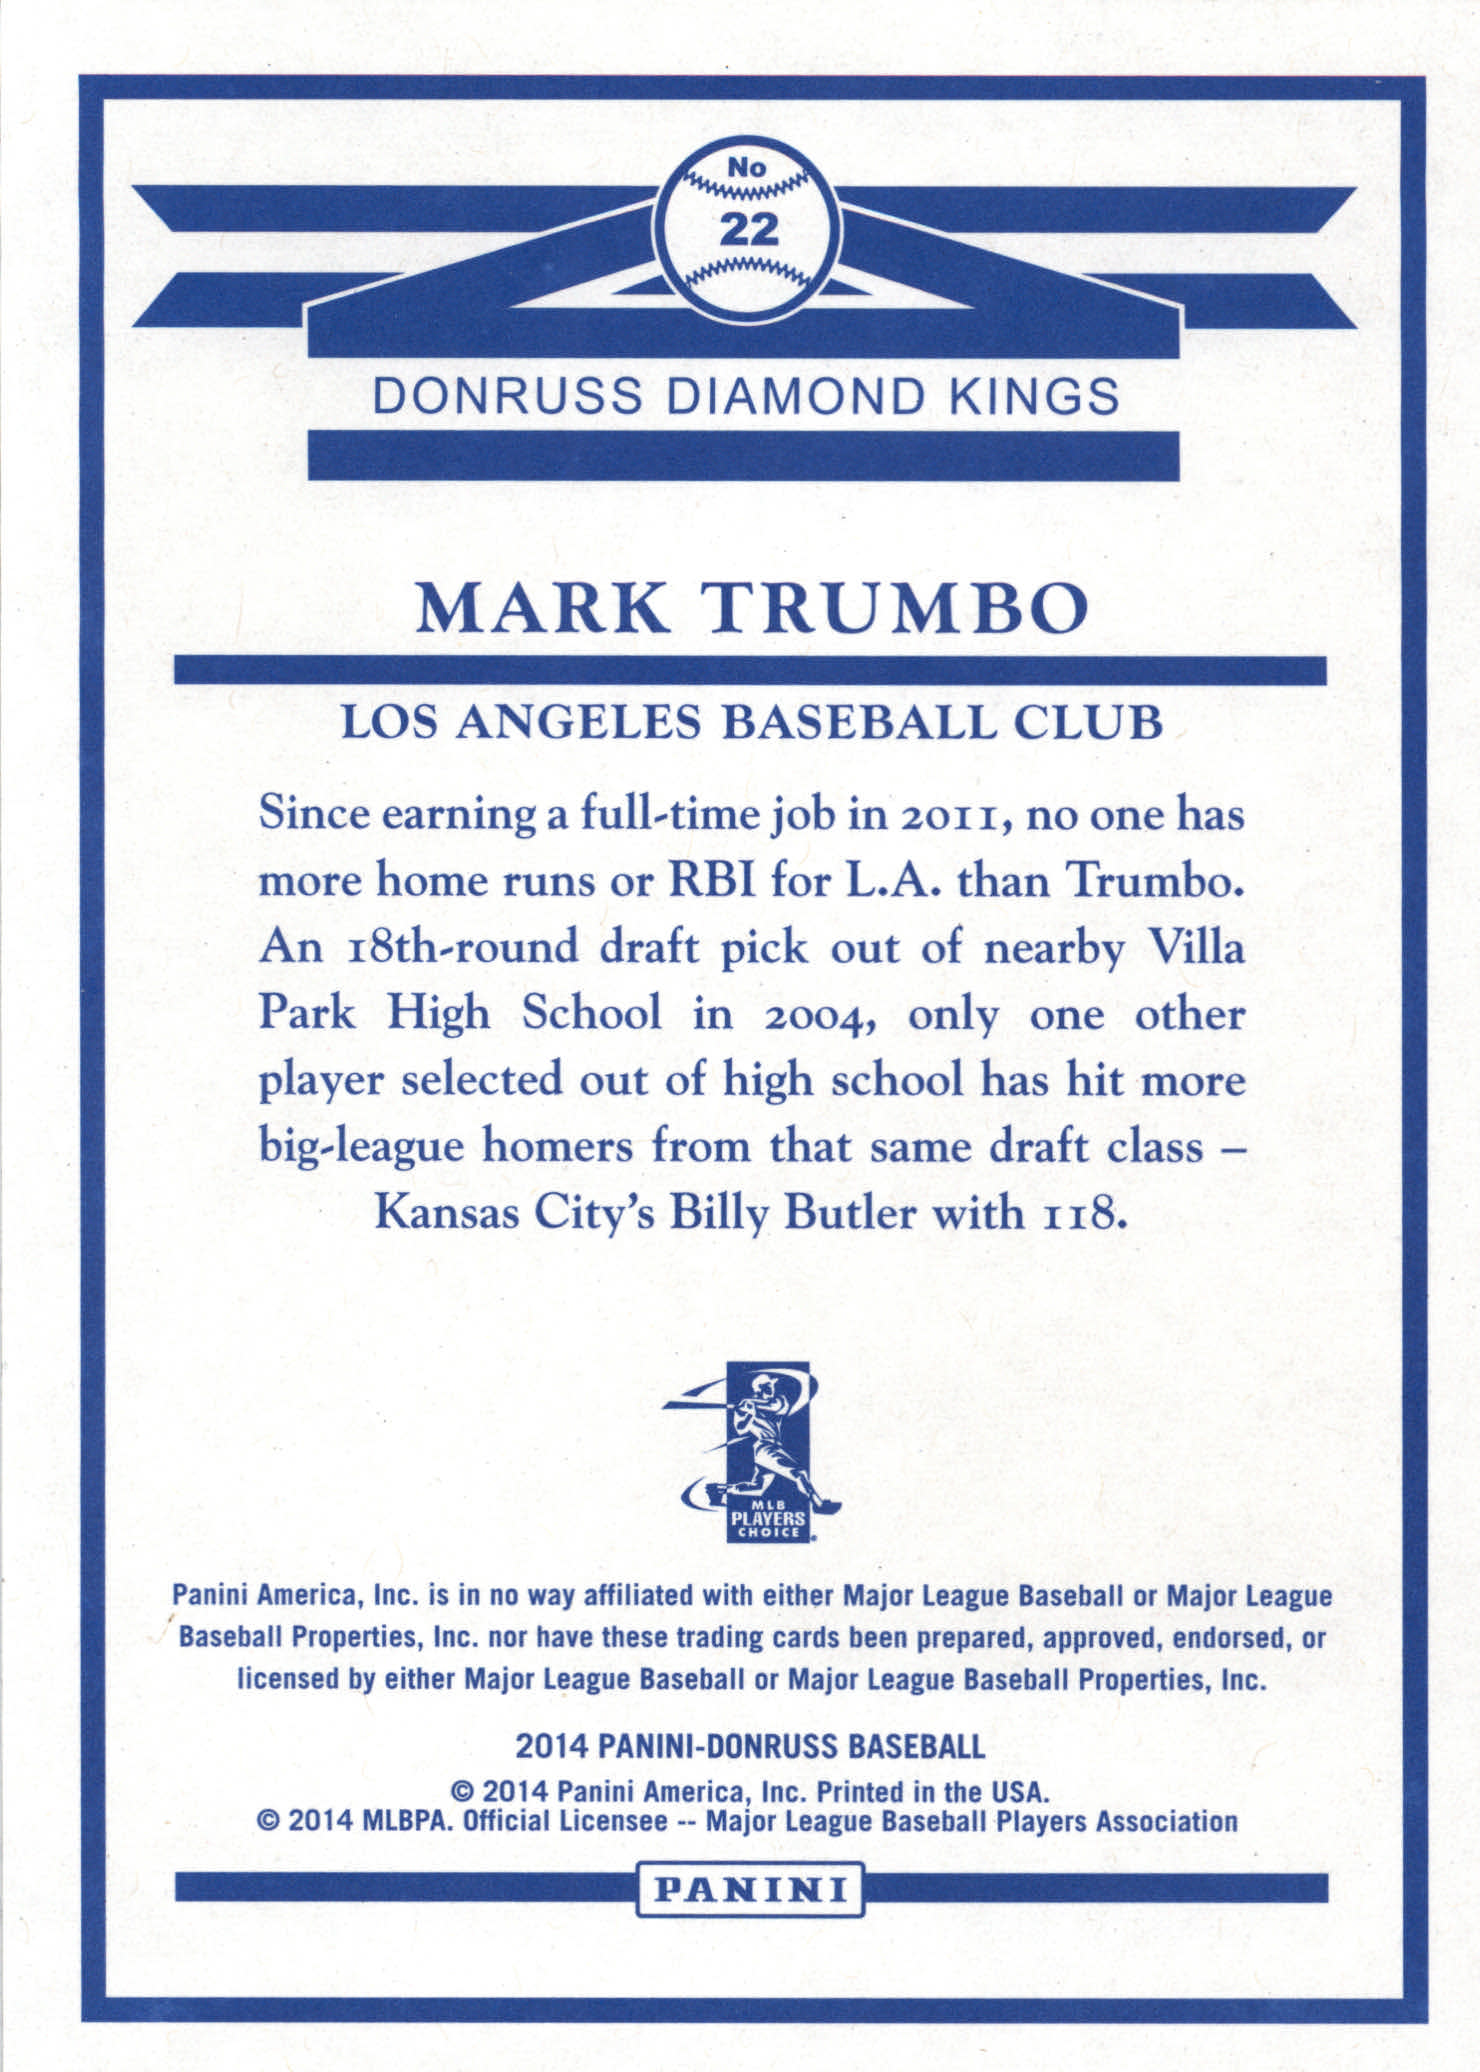 2014 Donruss Diamond King Box Toppers #22 Mark Trumbo back image